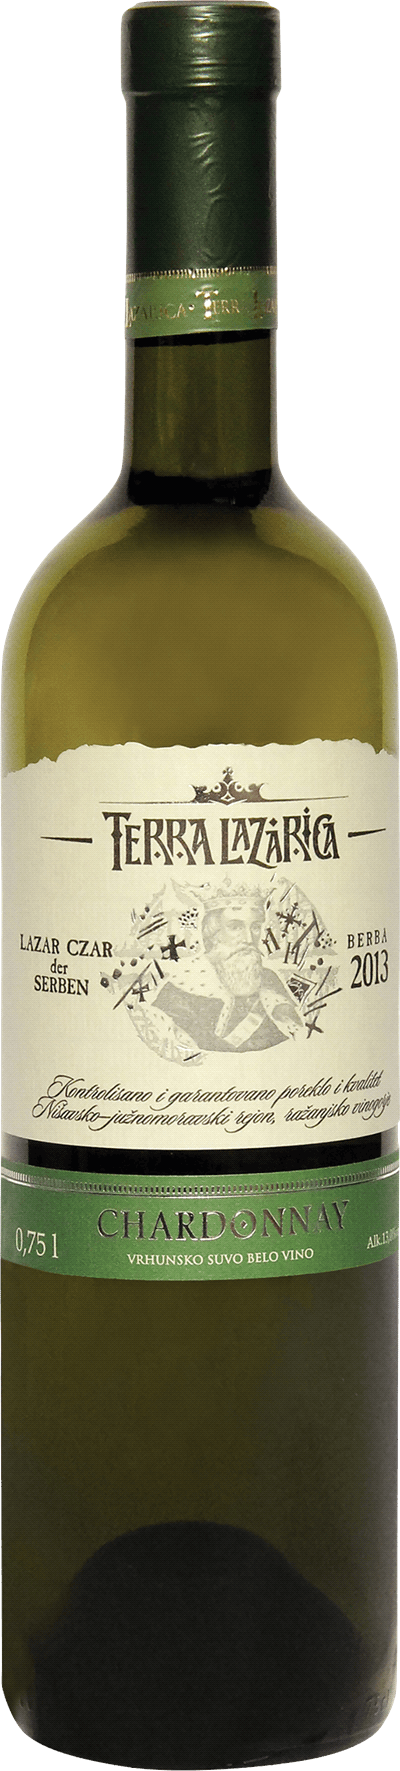 Terra Lazzarica Chardonnay